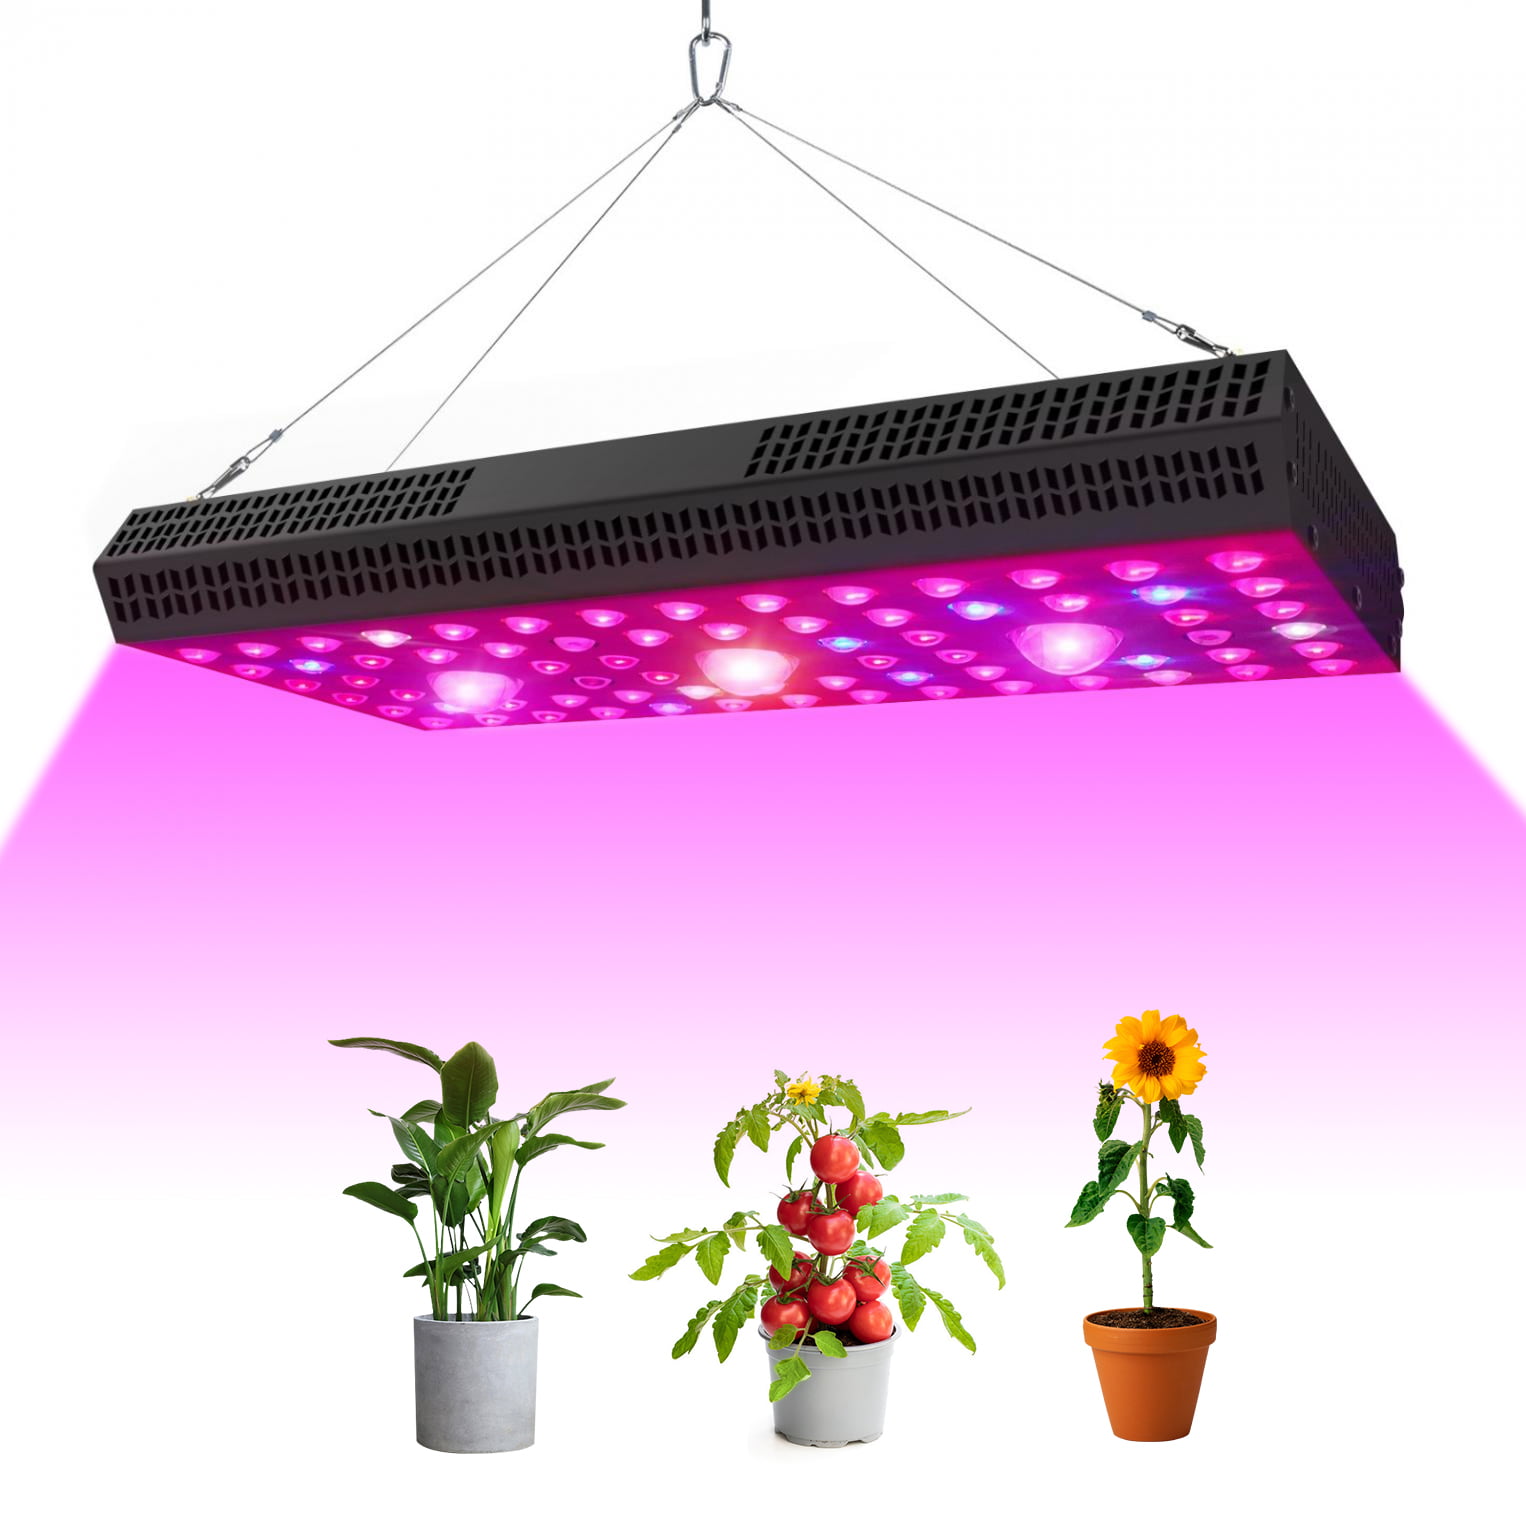 LED Grow Light Lamp 300W Full Spectrum Hydroponic greenhouse Indoor Plant Bloom 